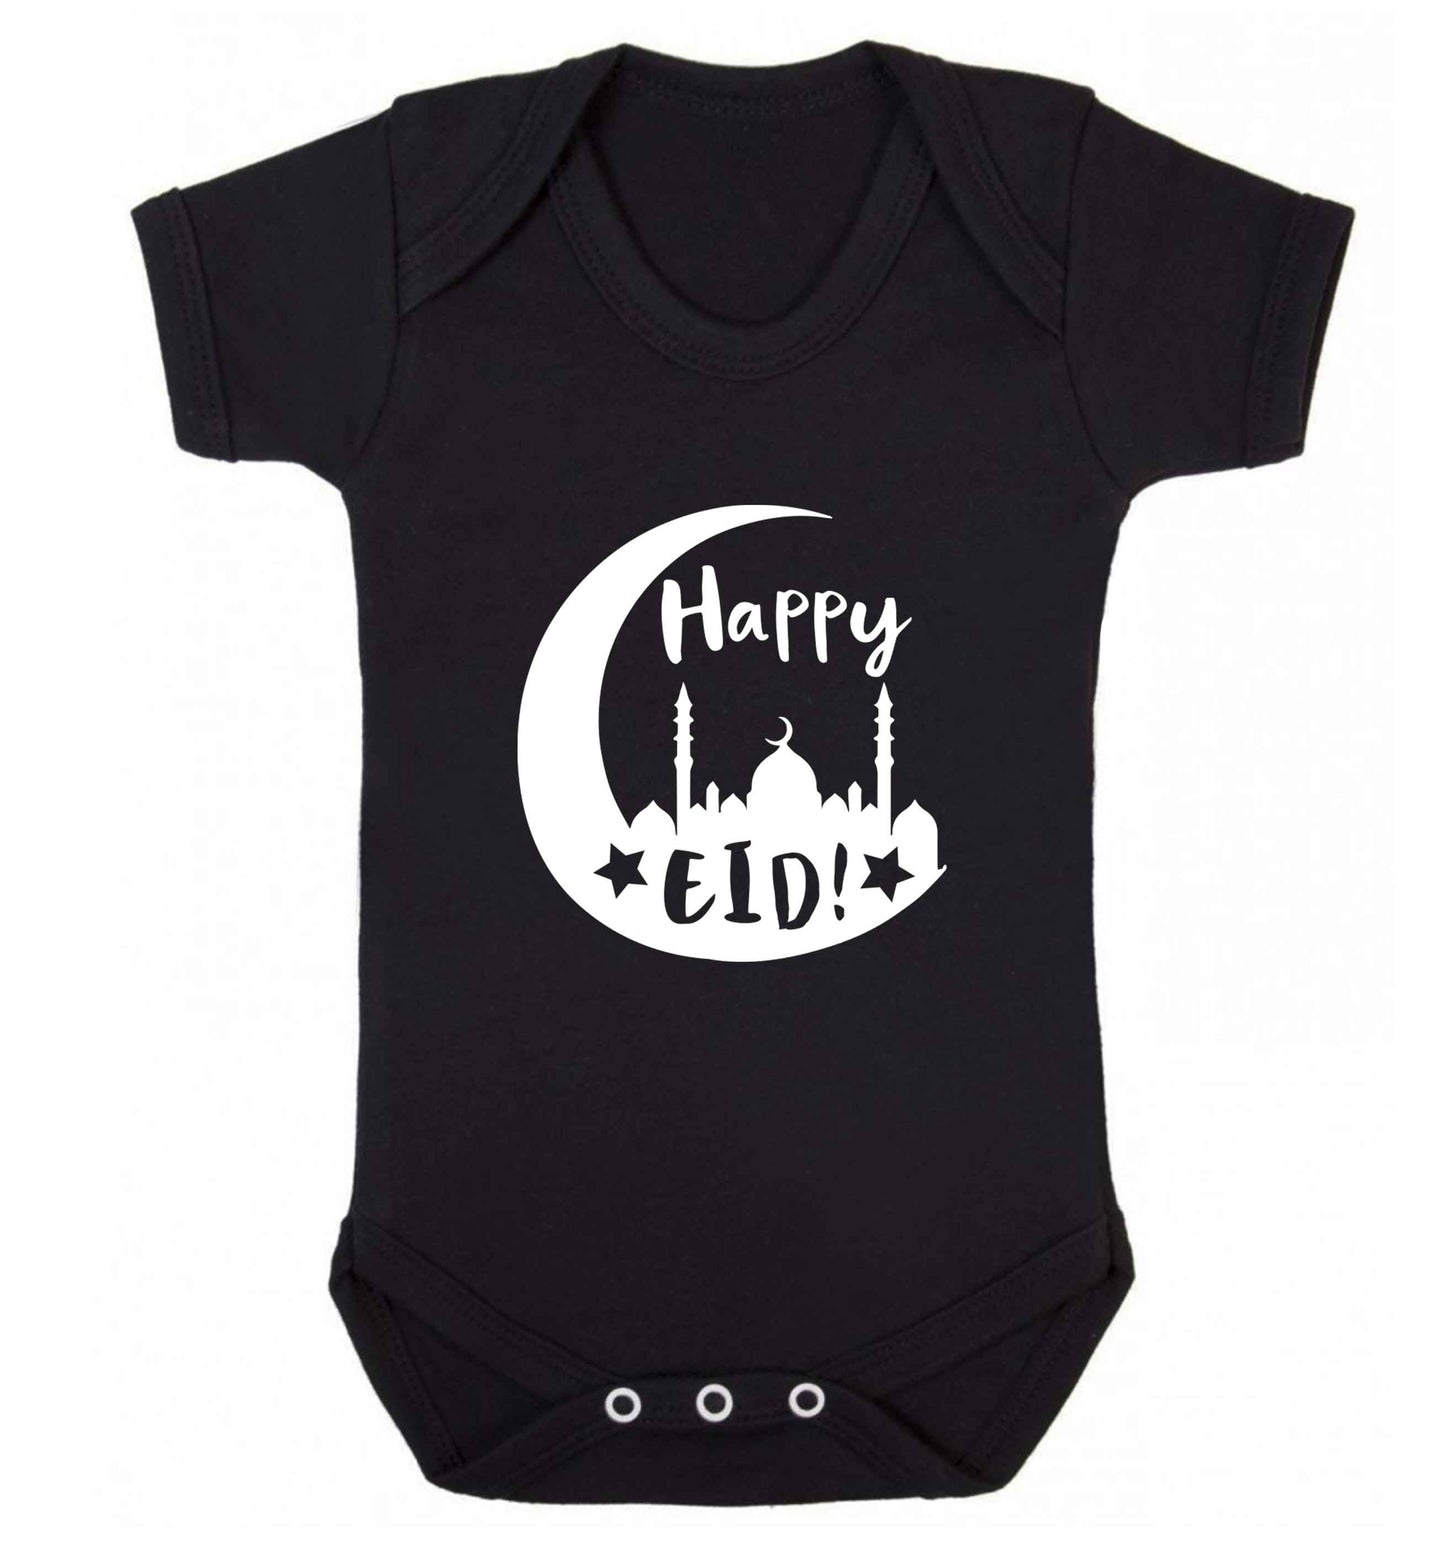 Happy Eid baby vest black 18-24 months